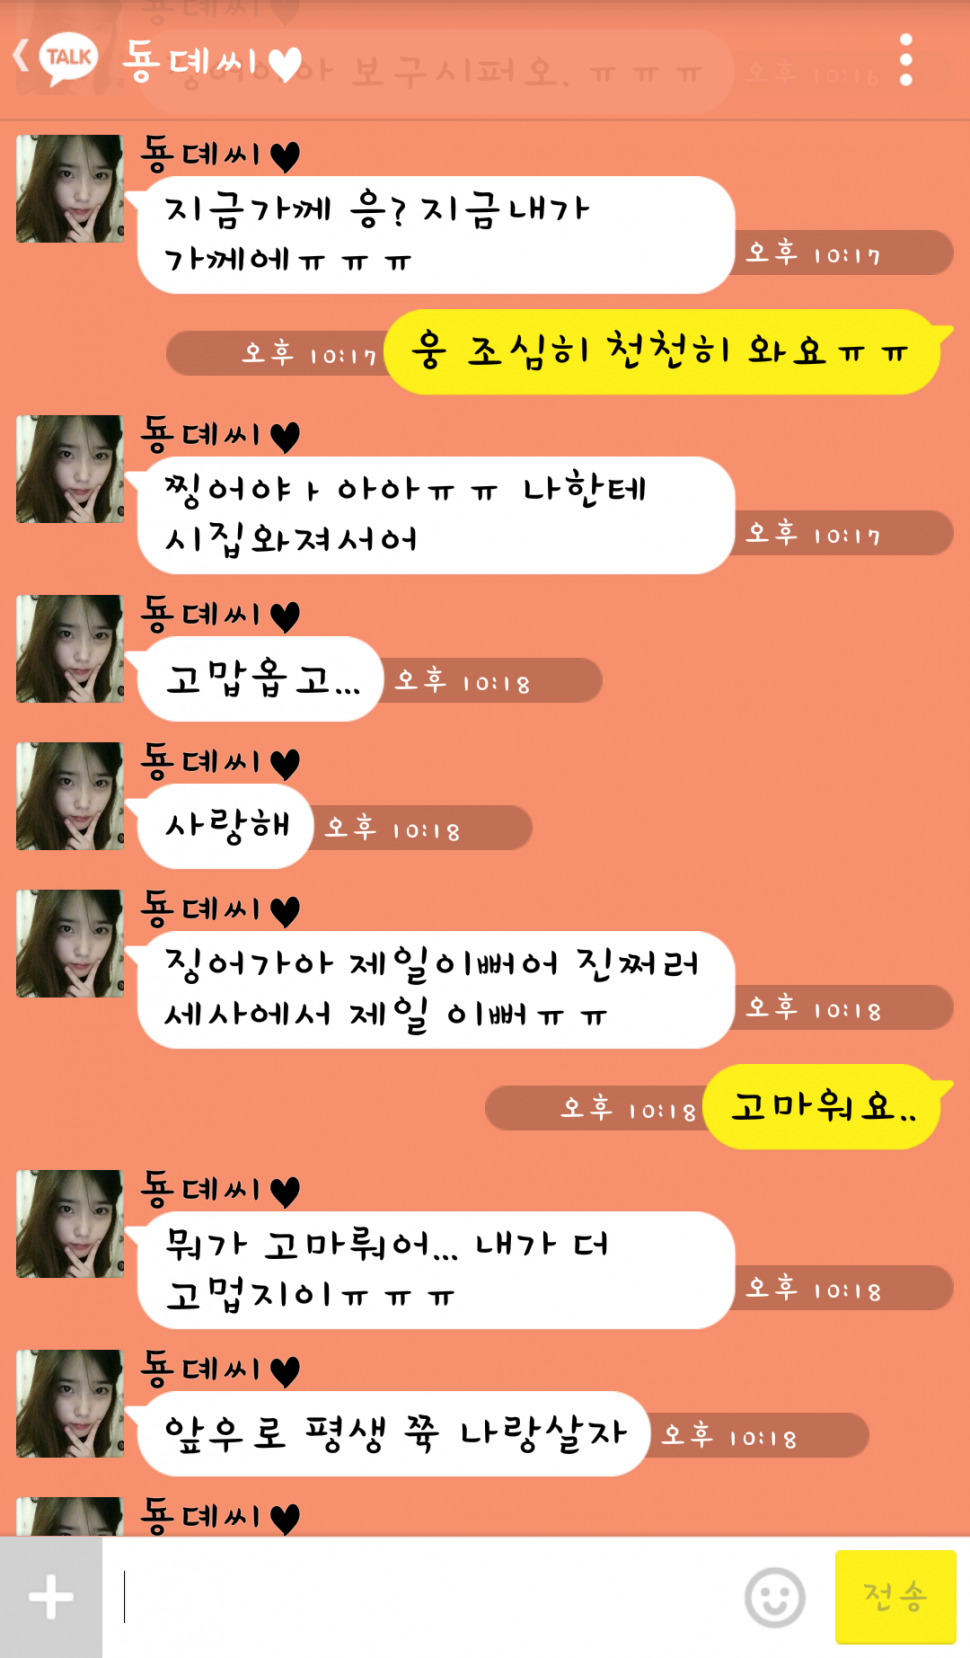 [EXO/종대] 8살연상 남자랑 결혼한 썰 03 (부제: 단호박 섭취) | 인스티즈